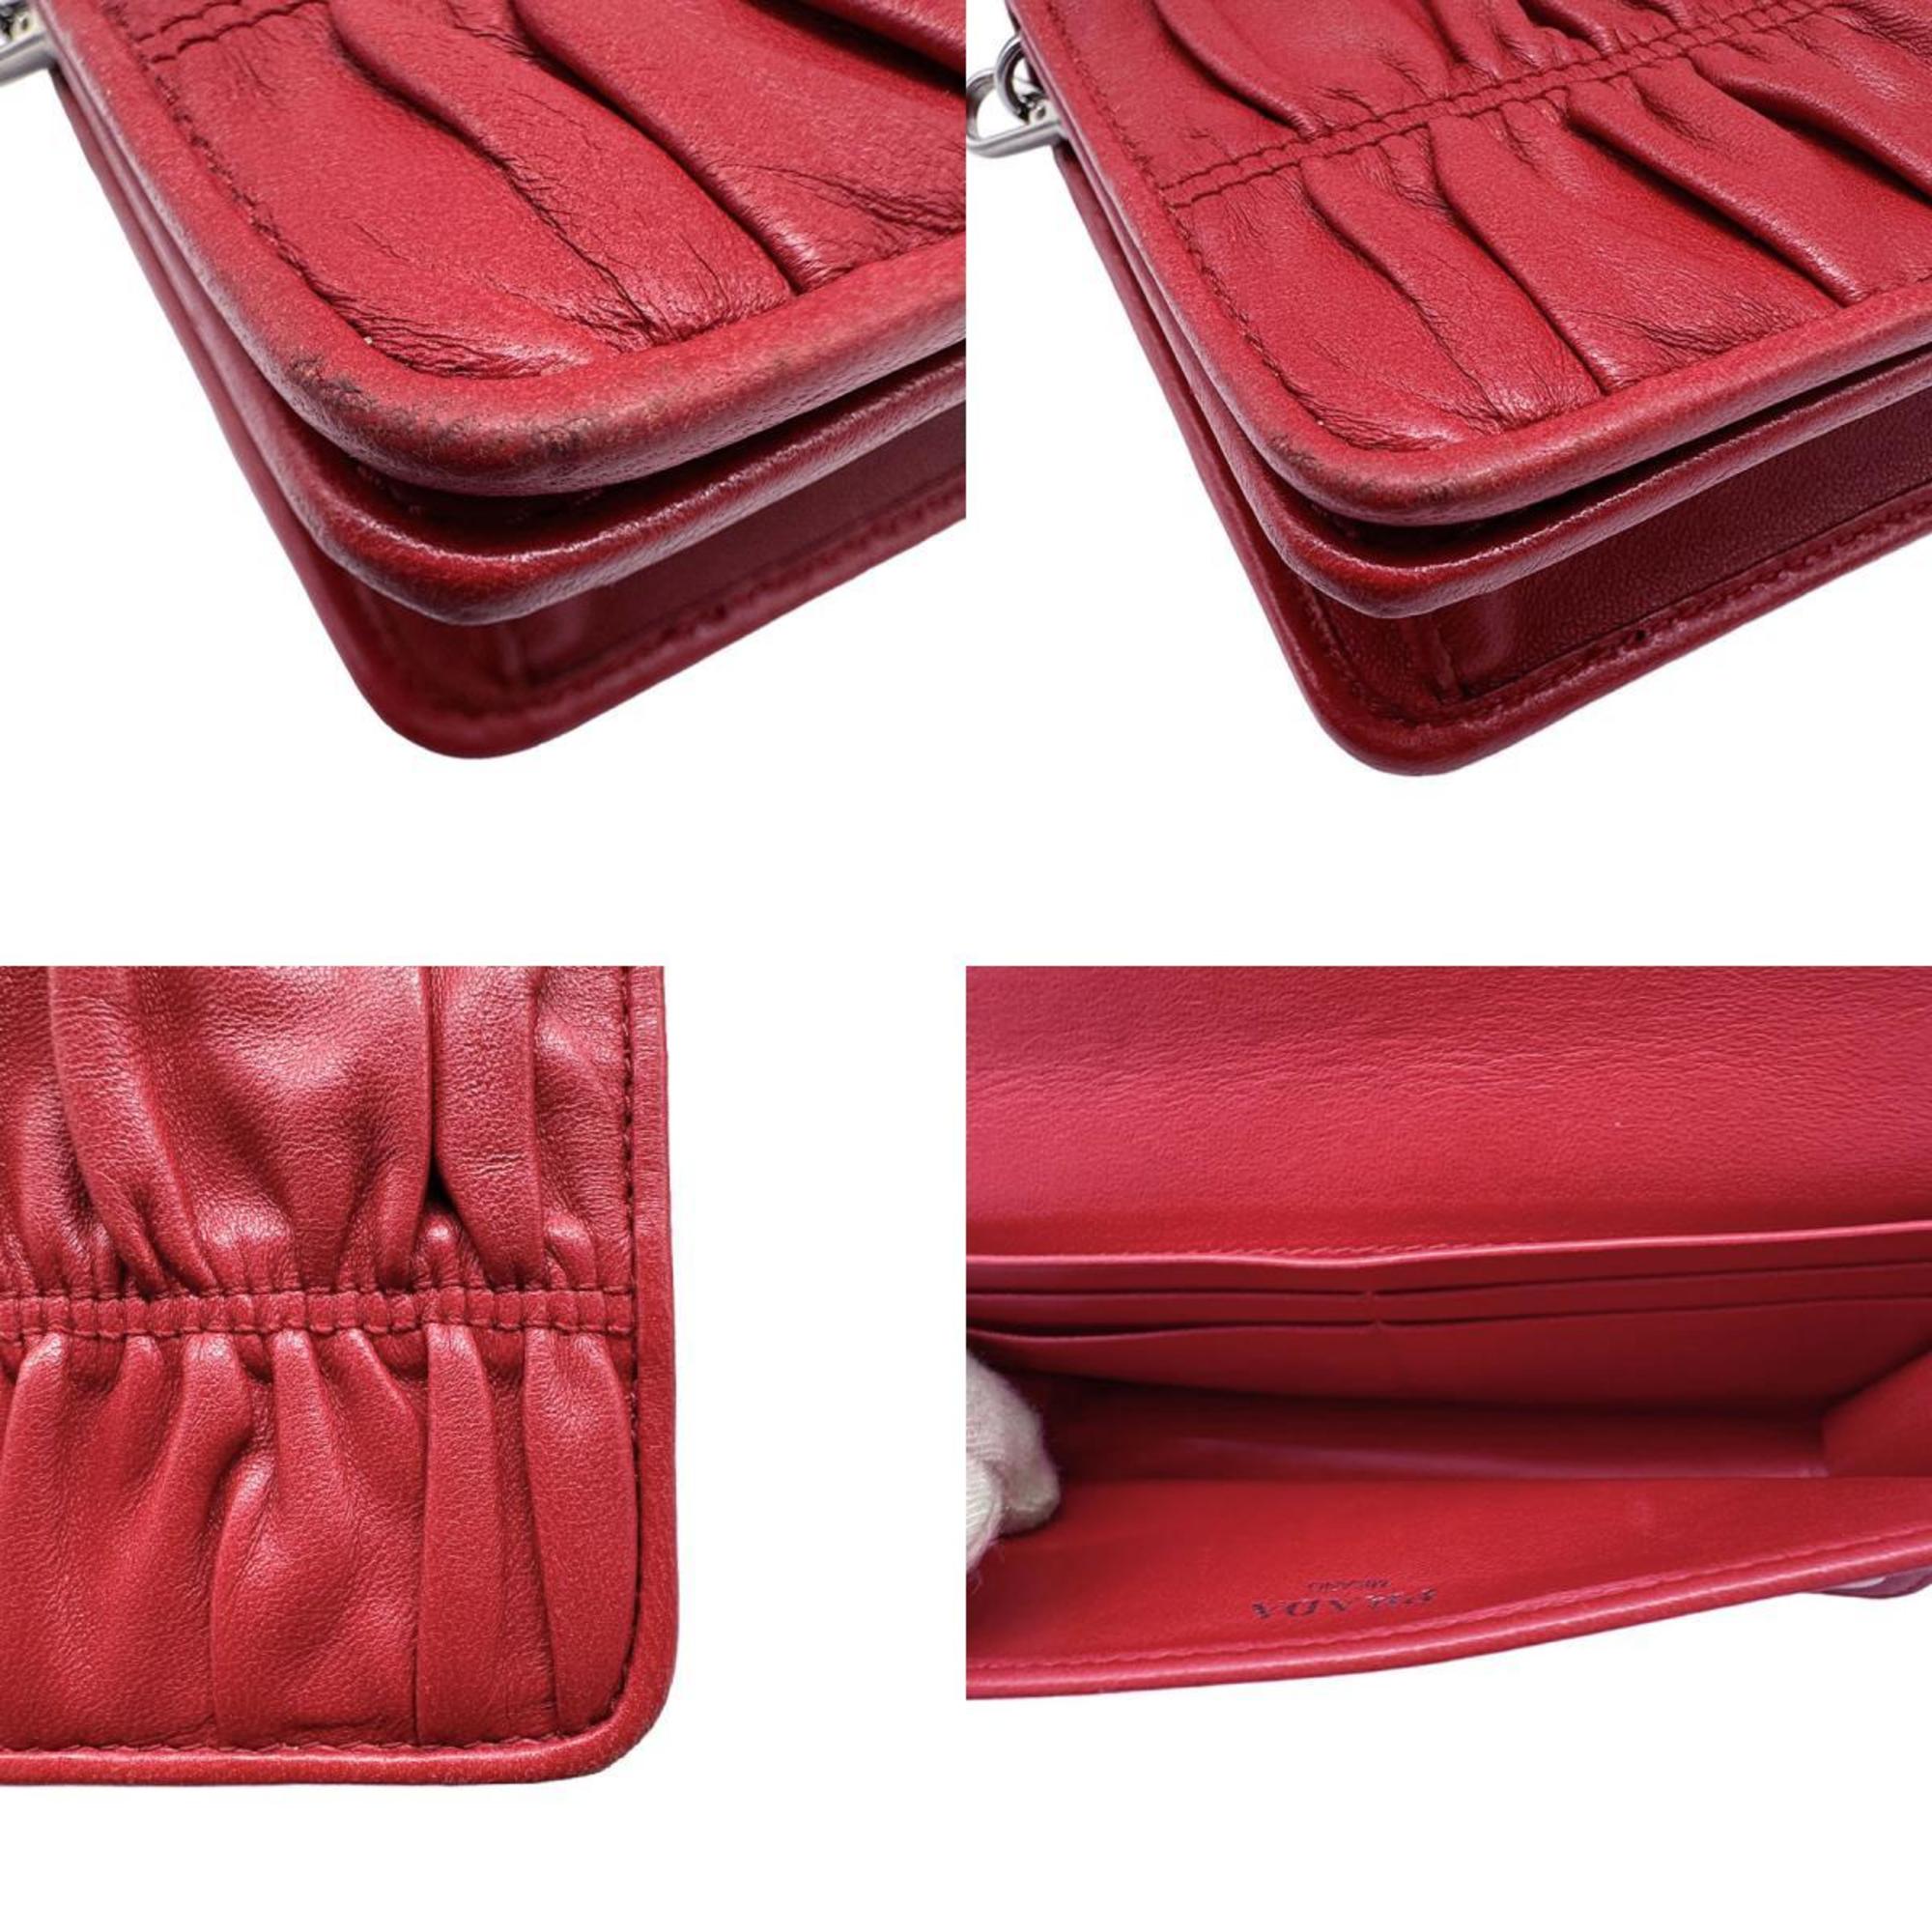 PRADA Shoulder Bag Leather/Metal Red/Silver Women's z0475